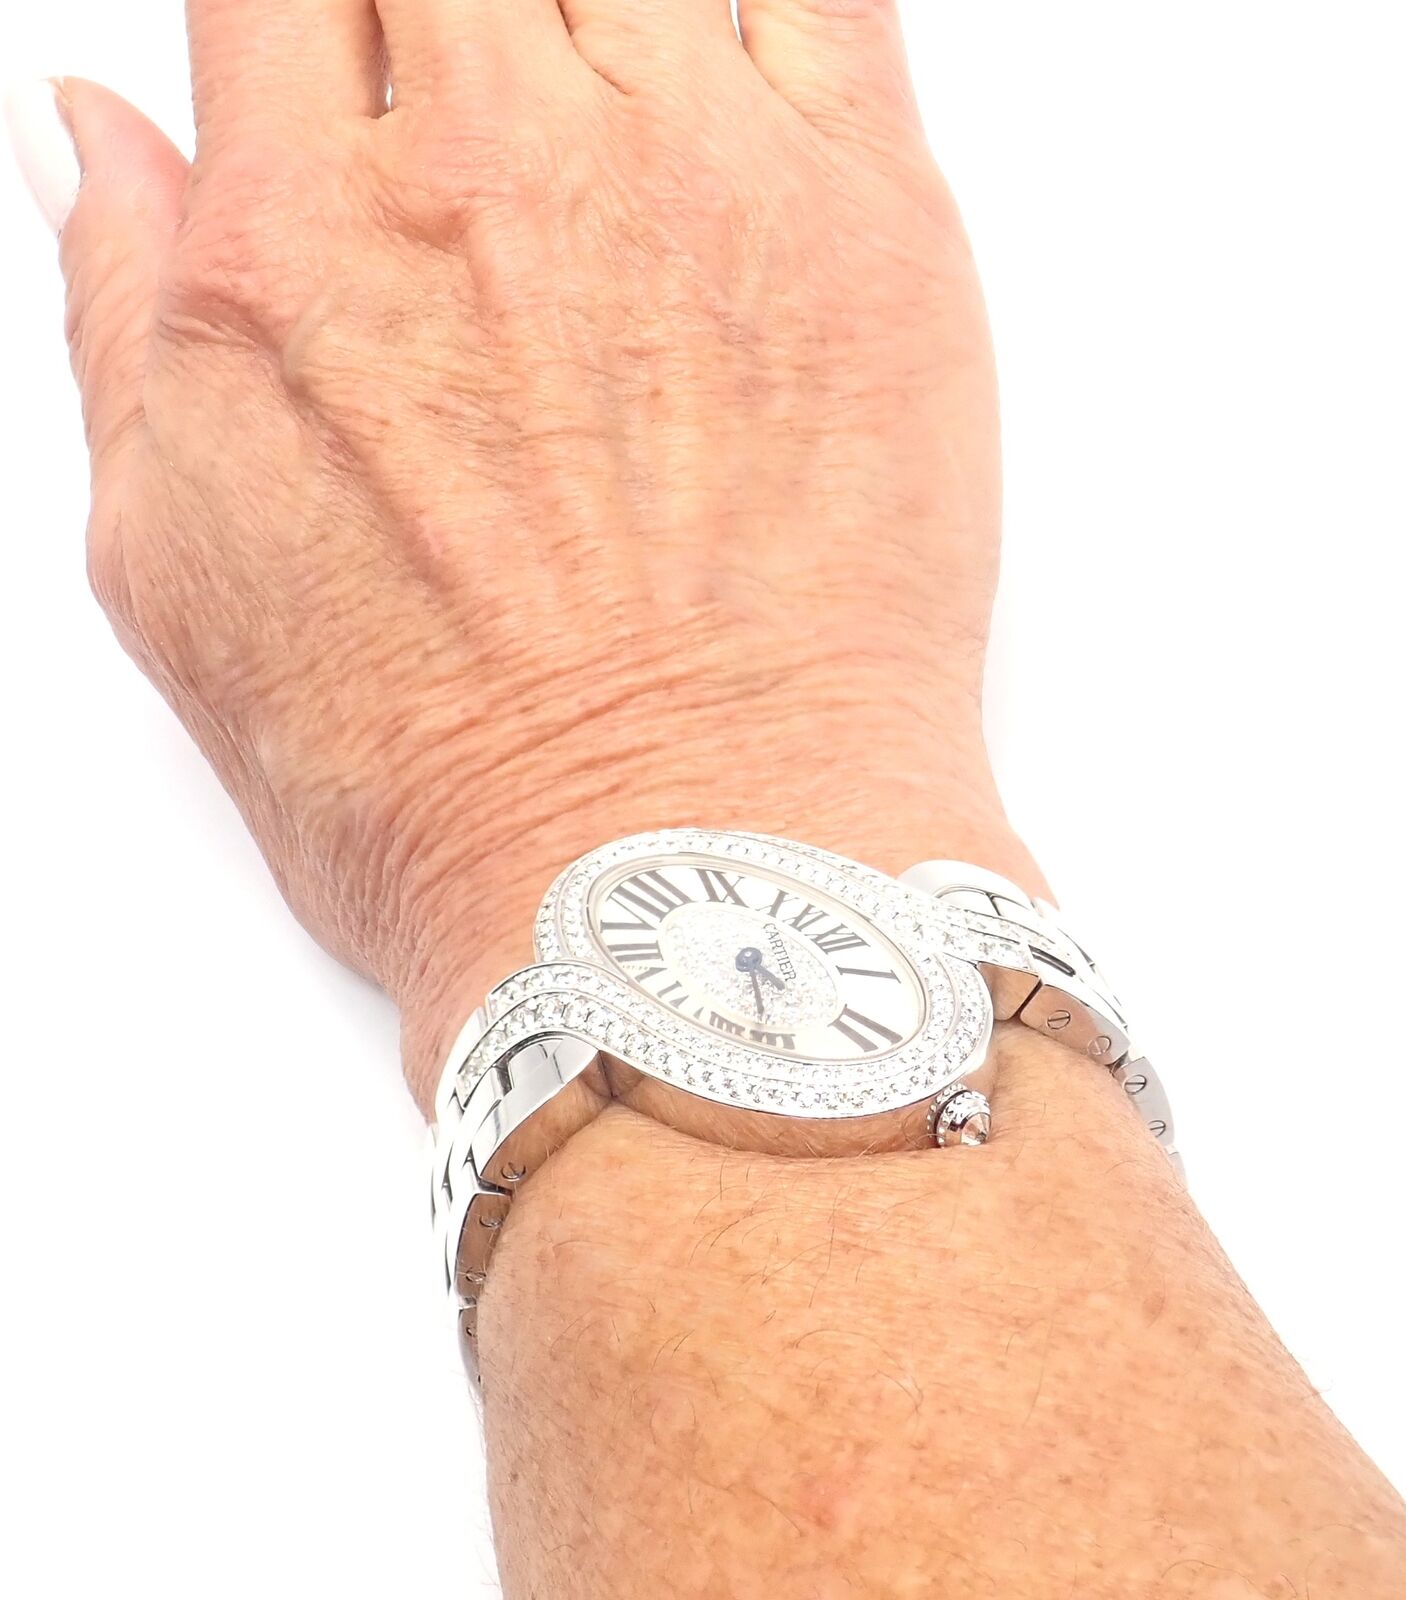 Cartier Jewelry & Watches:Watches, Parts & Accessories:Watches:Wristwatches Authentic! Cartier Delices de Cartier 18k White Gold Diamond Quartz Watch 3380